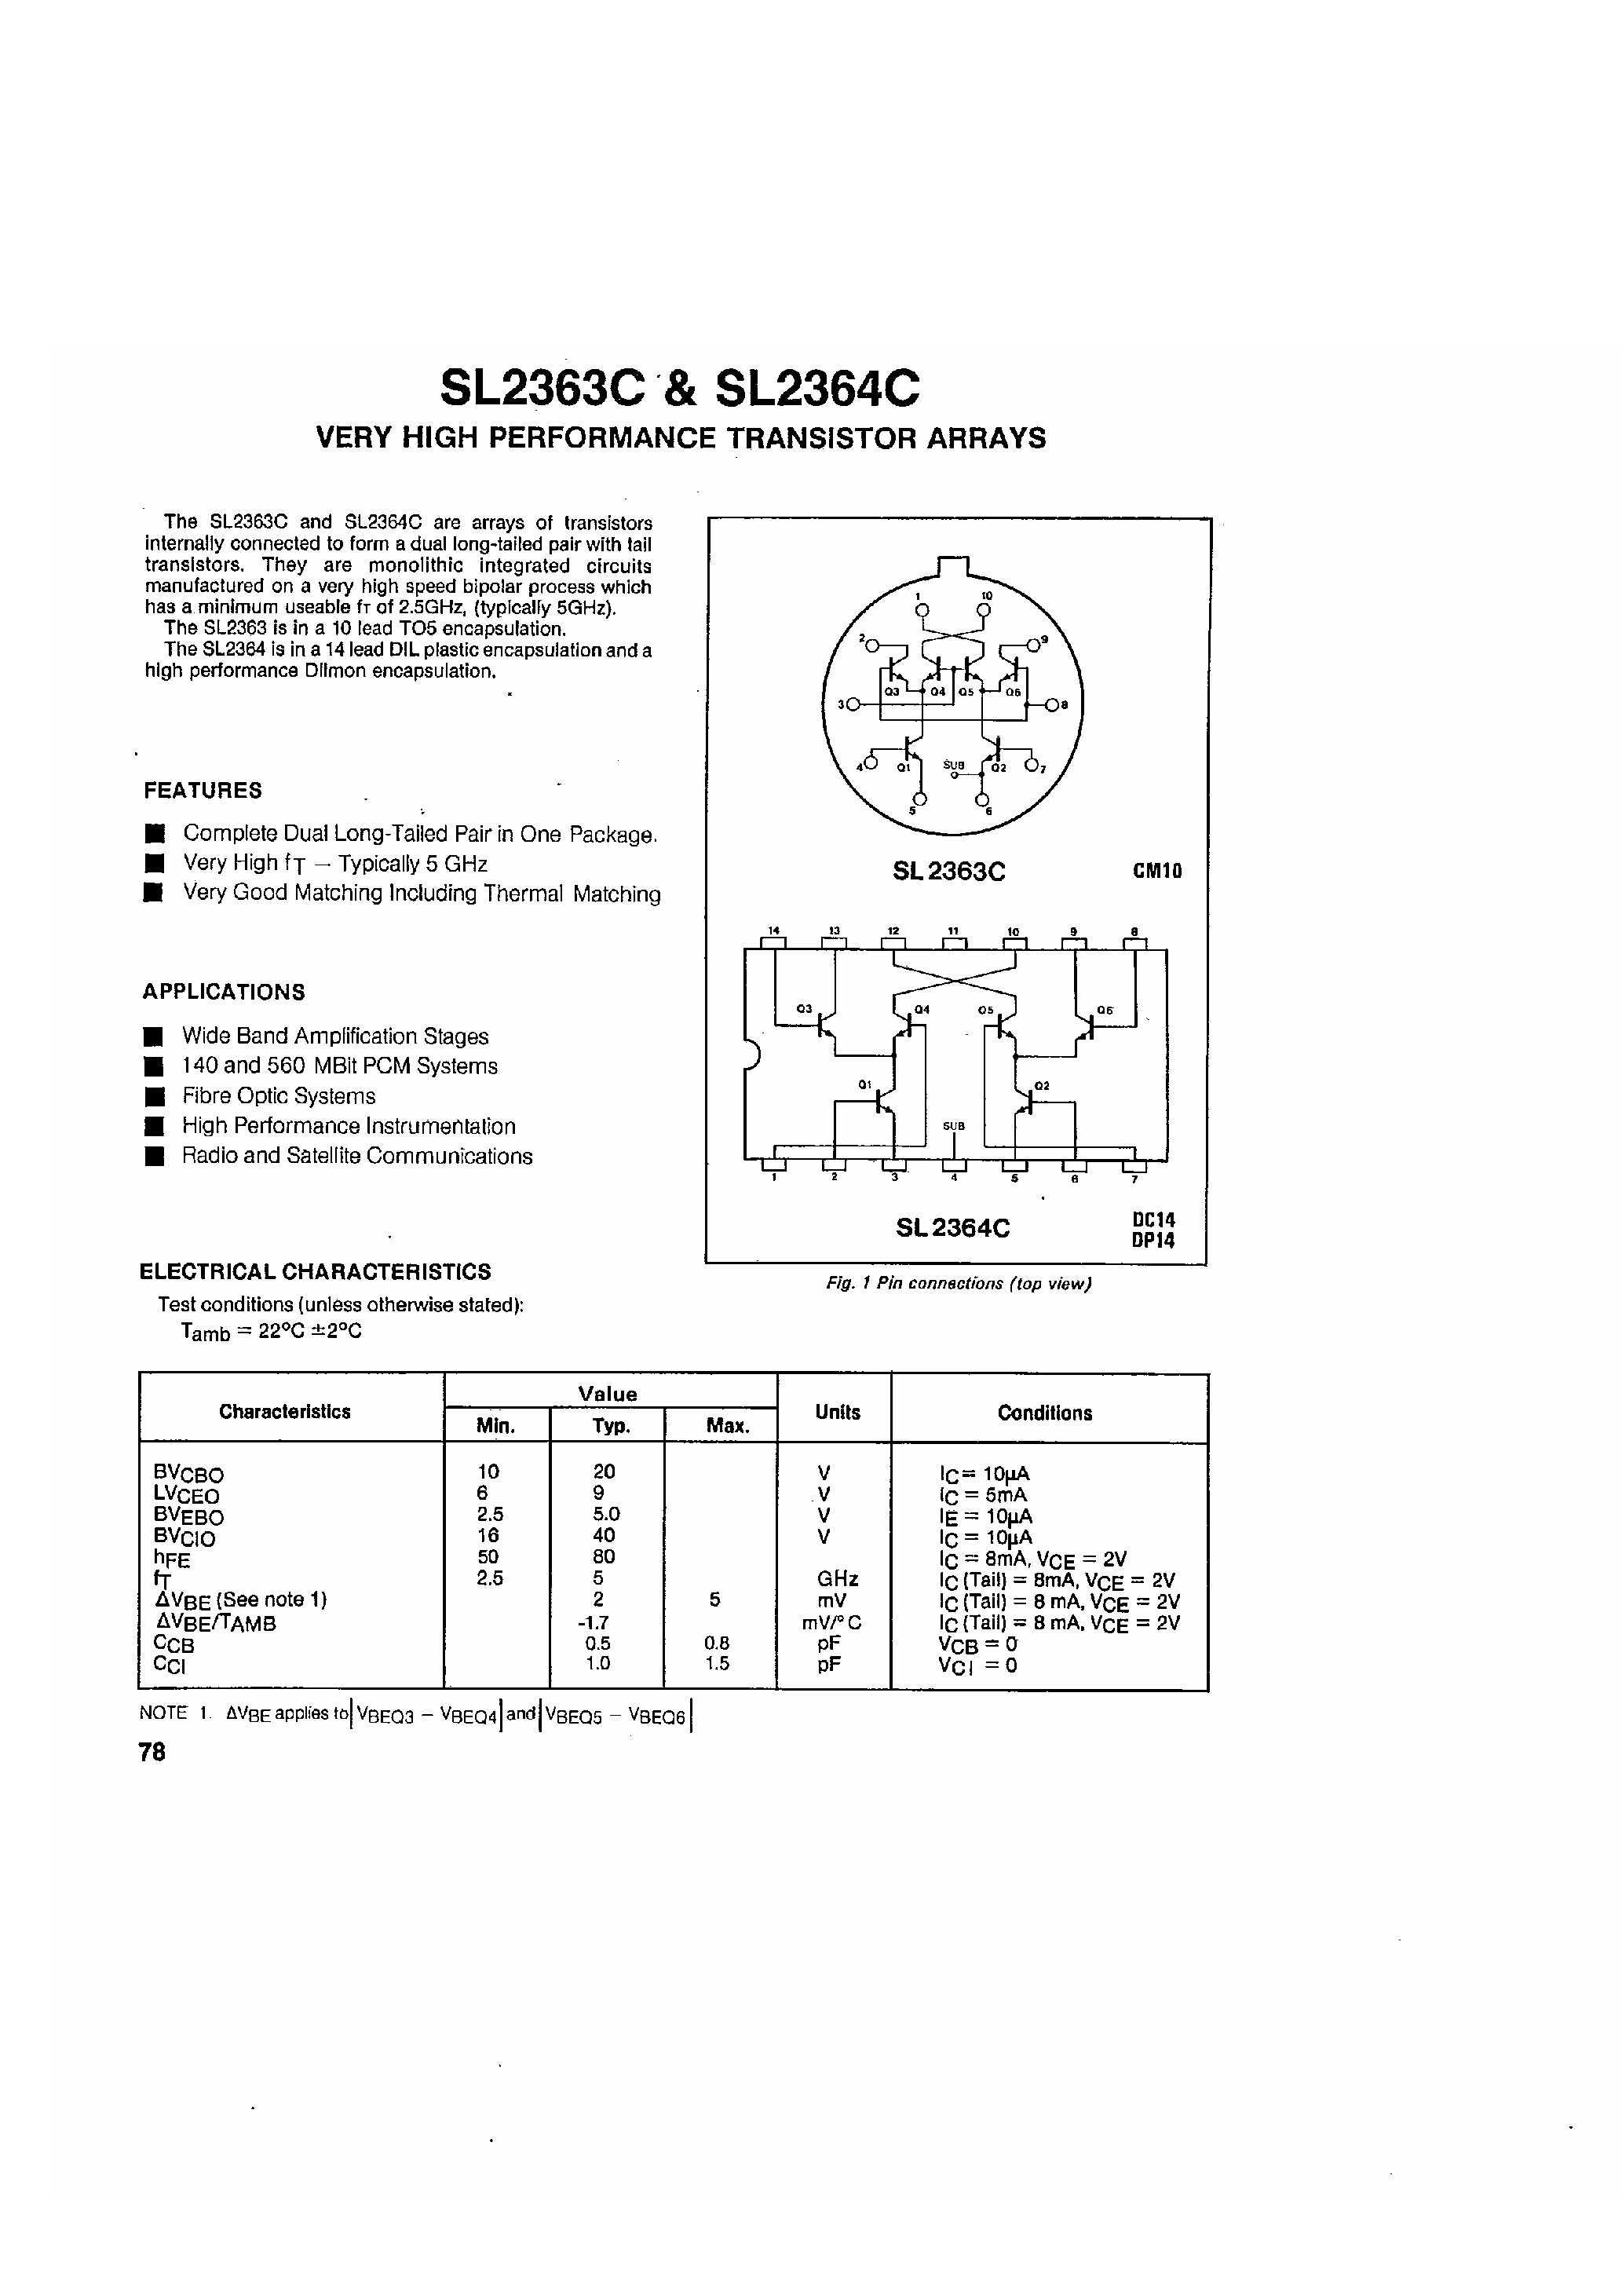 Datasheet SL2364C - (SL2363C) Very High Performance Transistor Arrays page 1